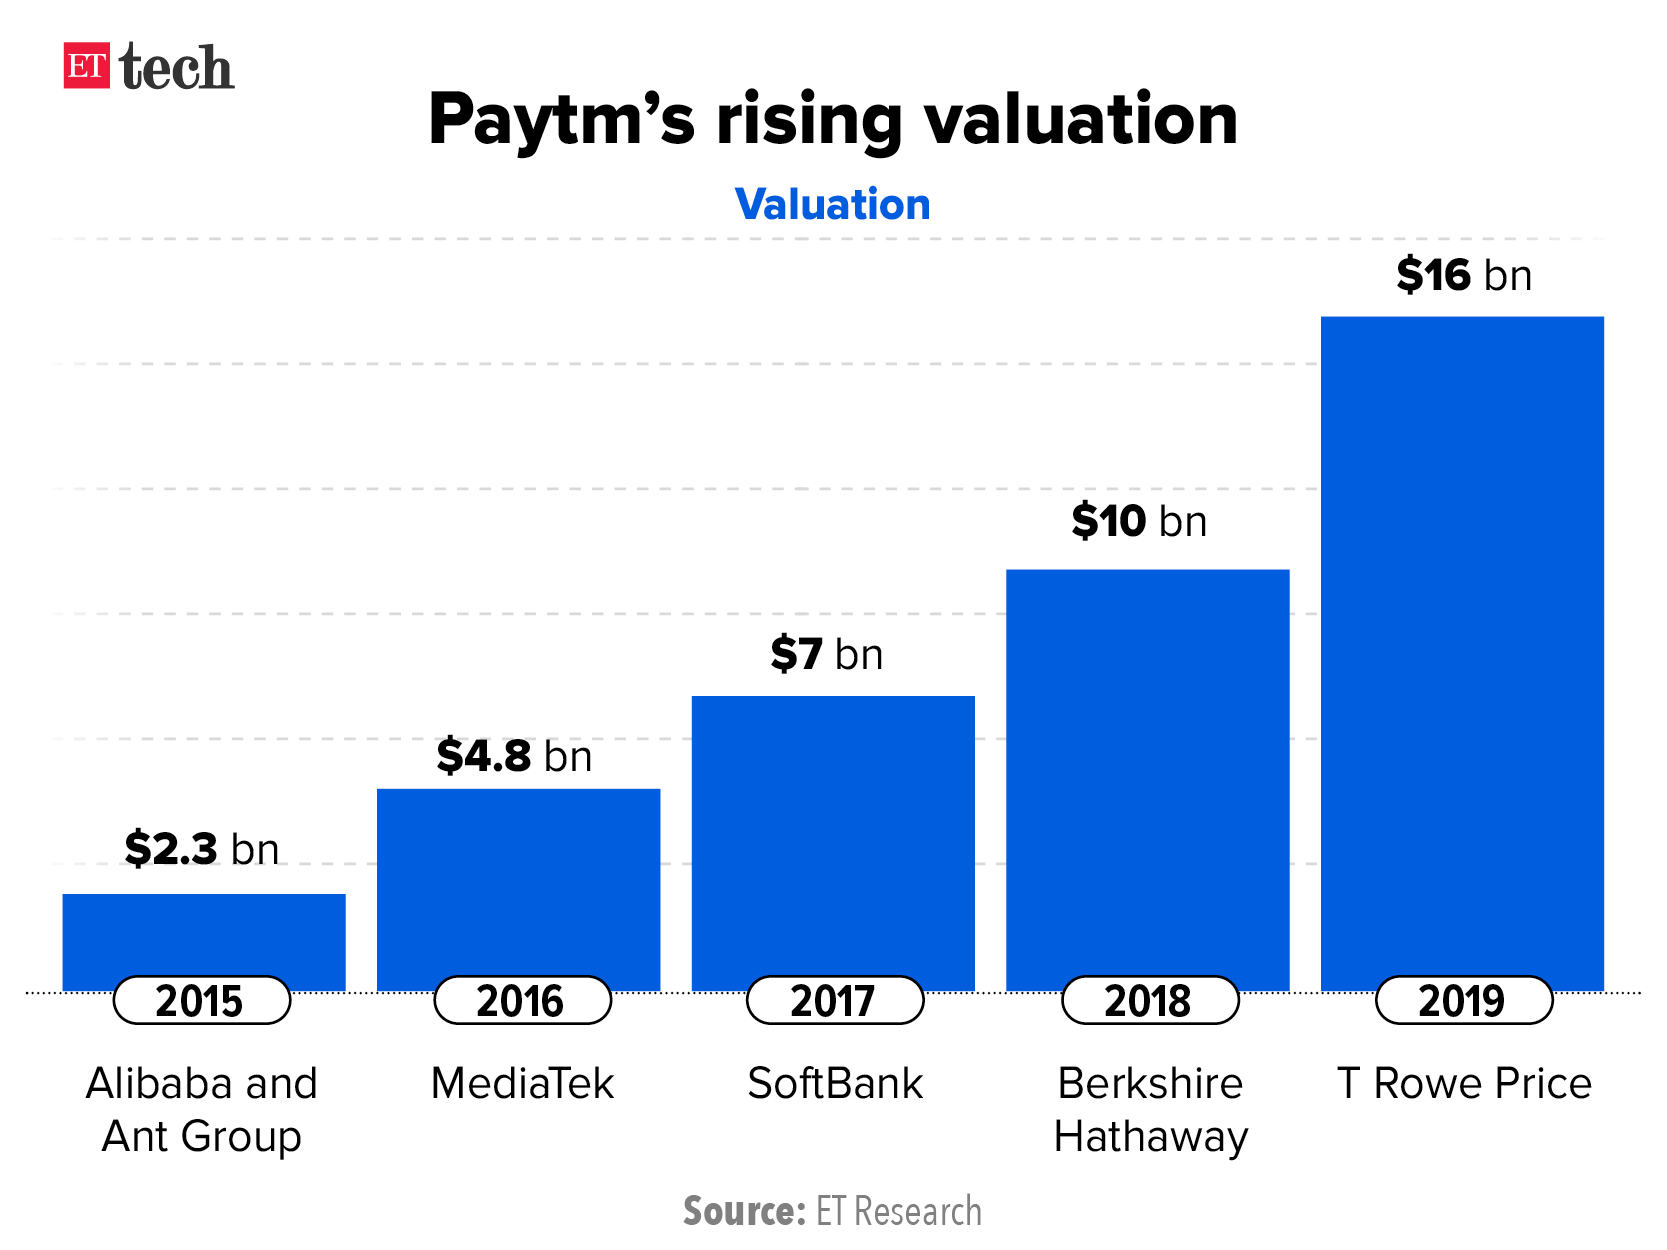 Paytm’s rising valuation